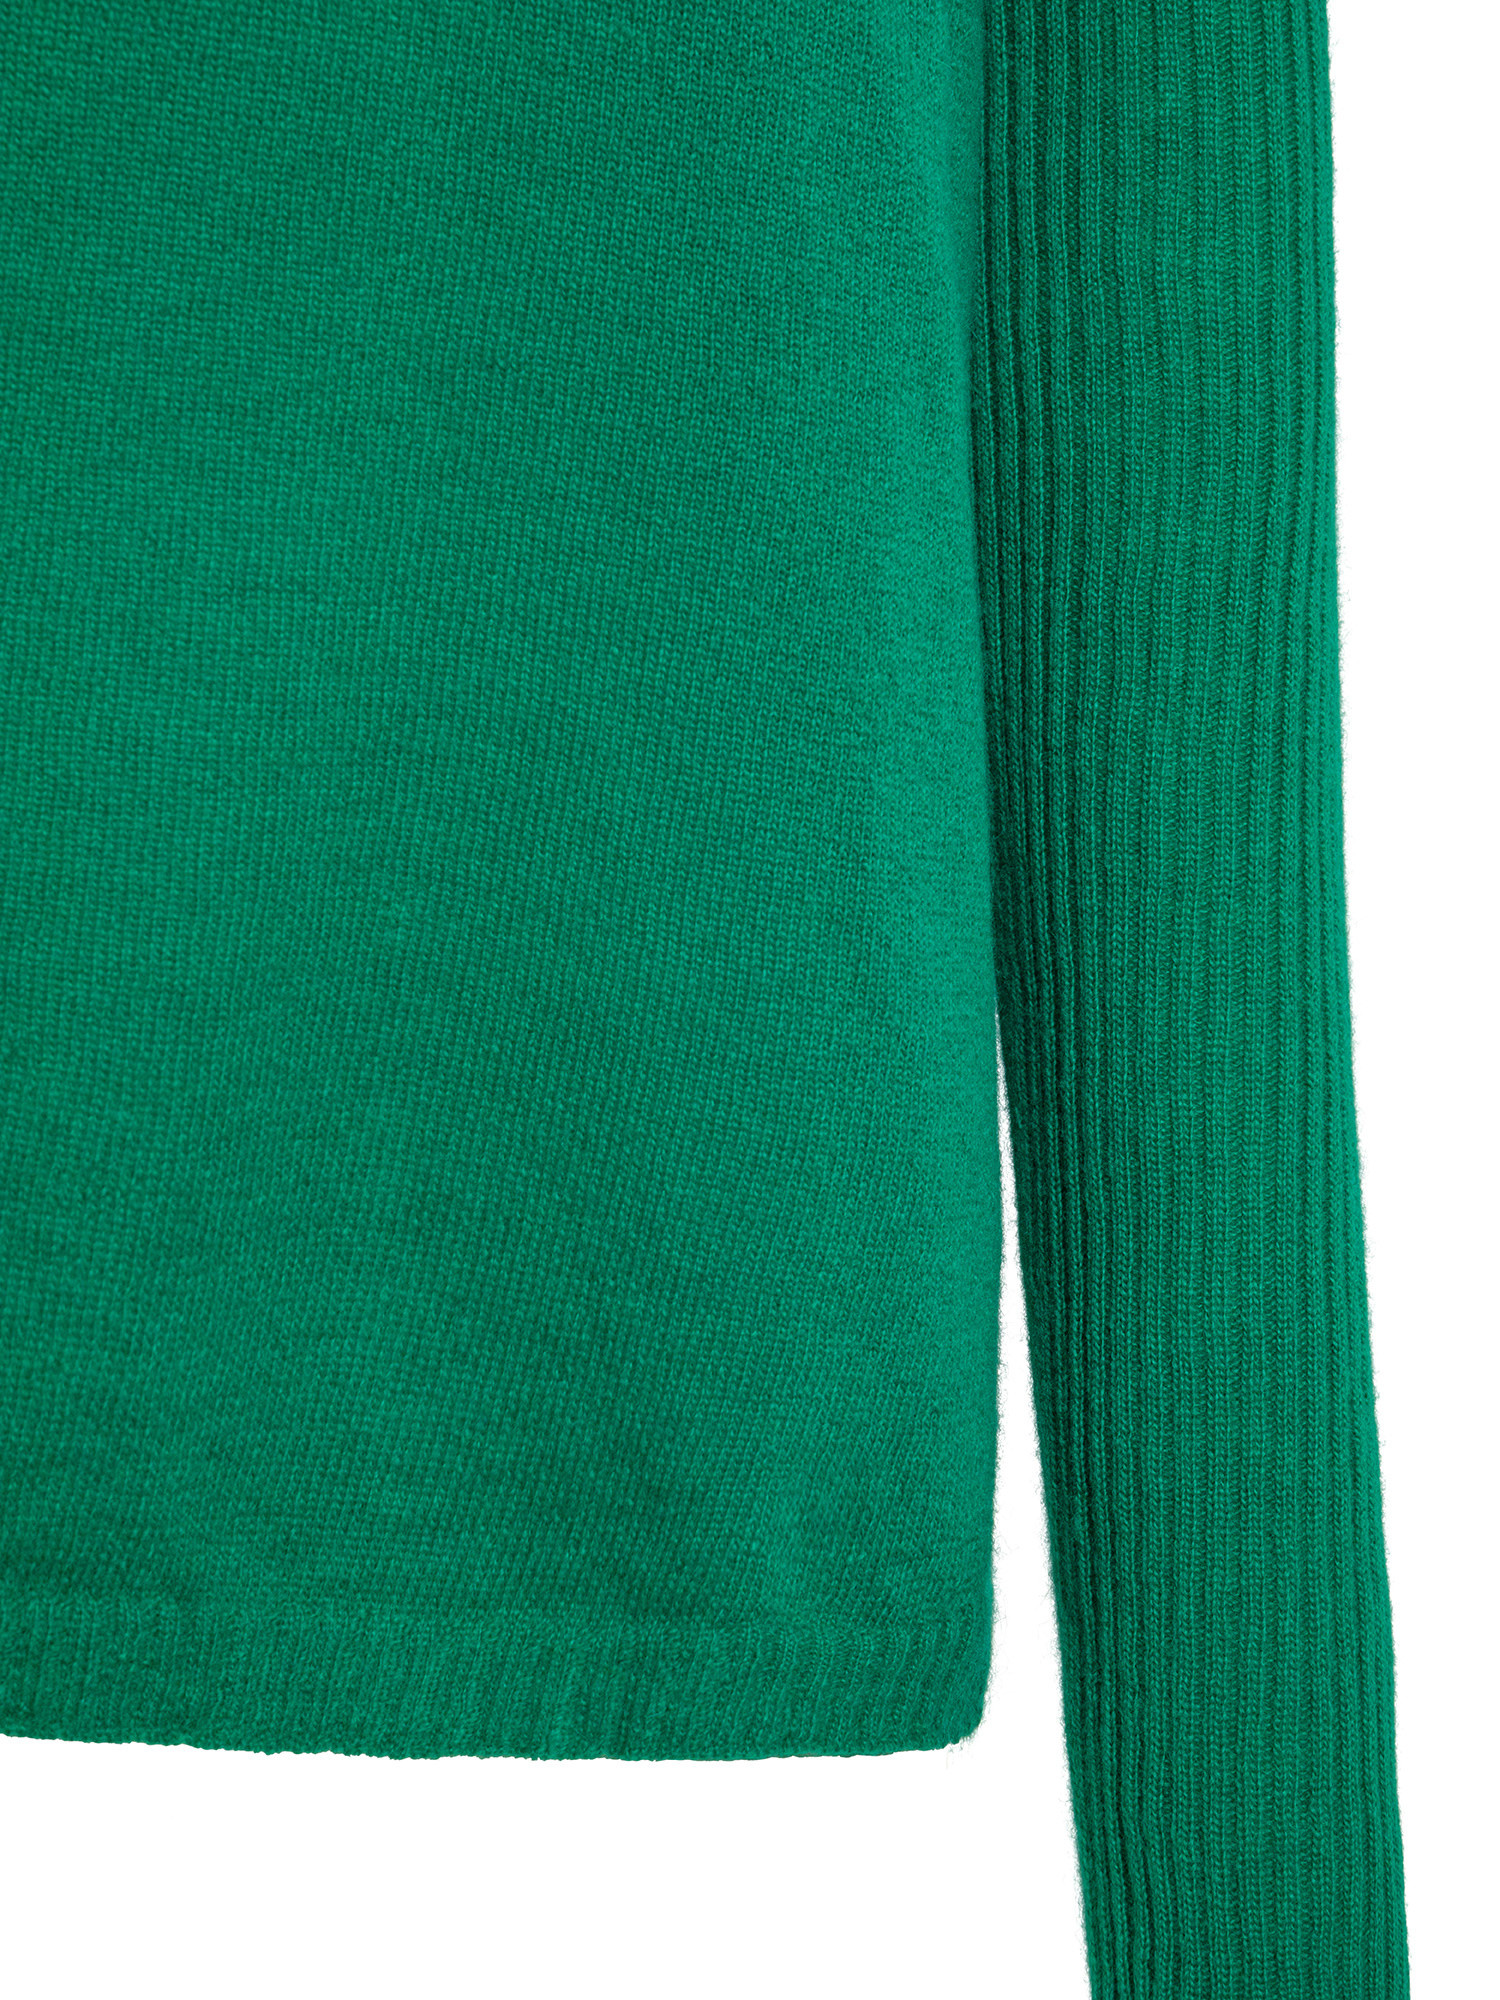 K Collection - Turtleneck sweater, Green, large image number 2